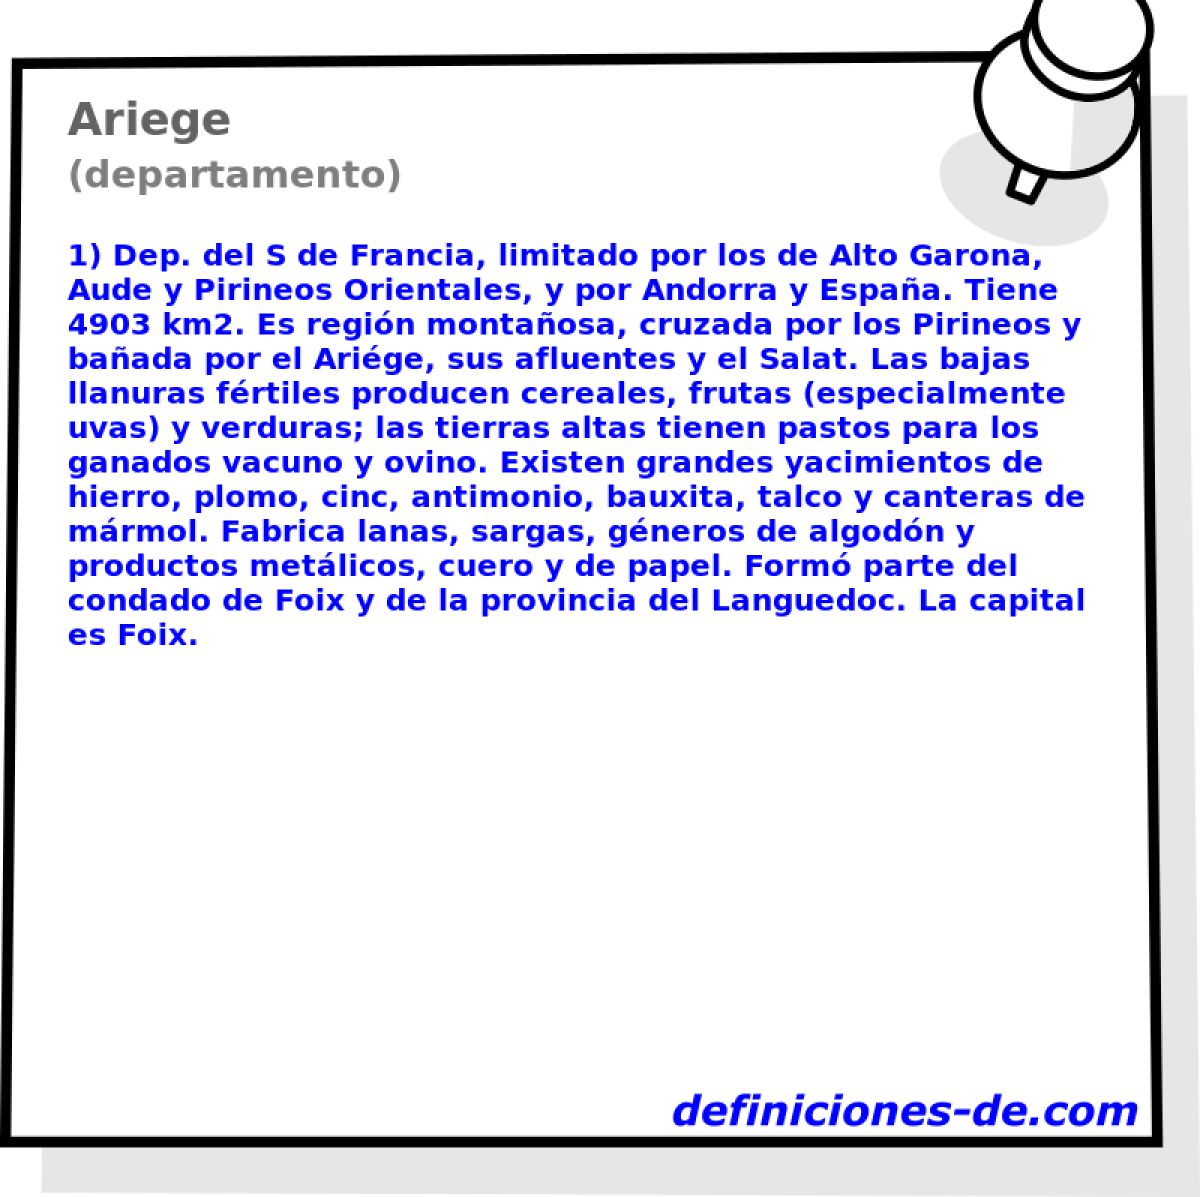 Ariege (departamento)